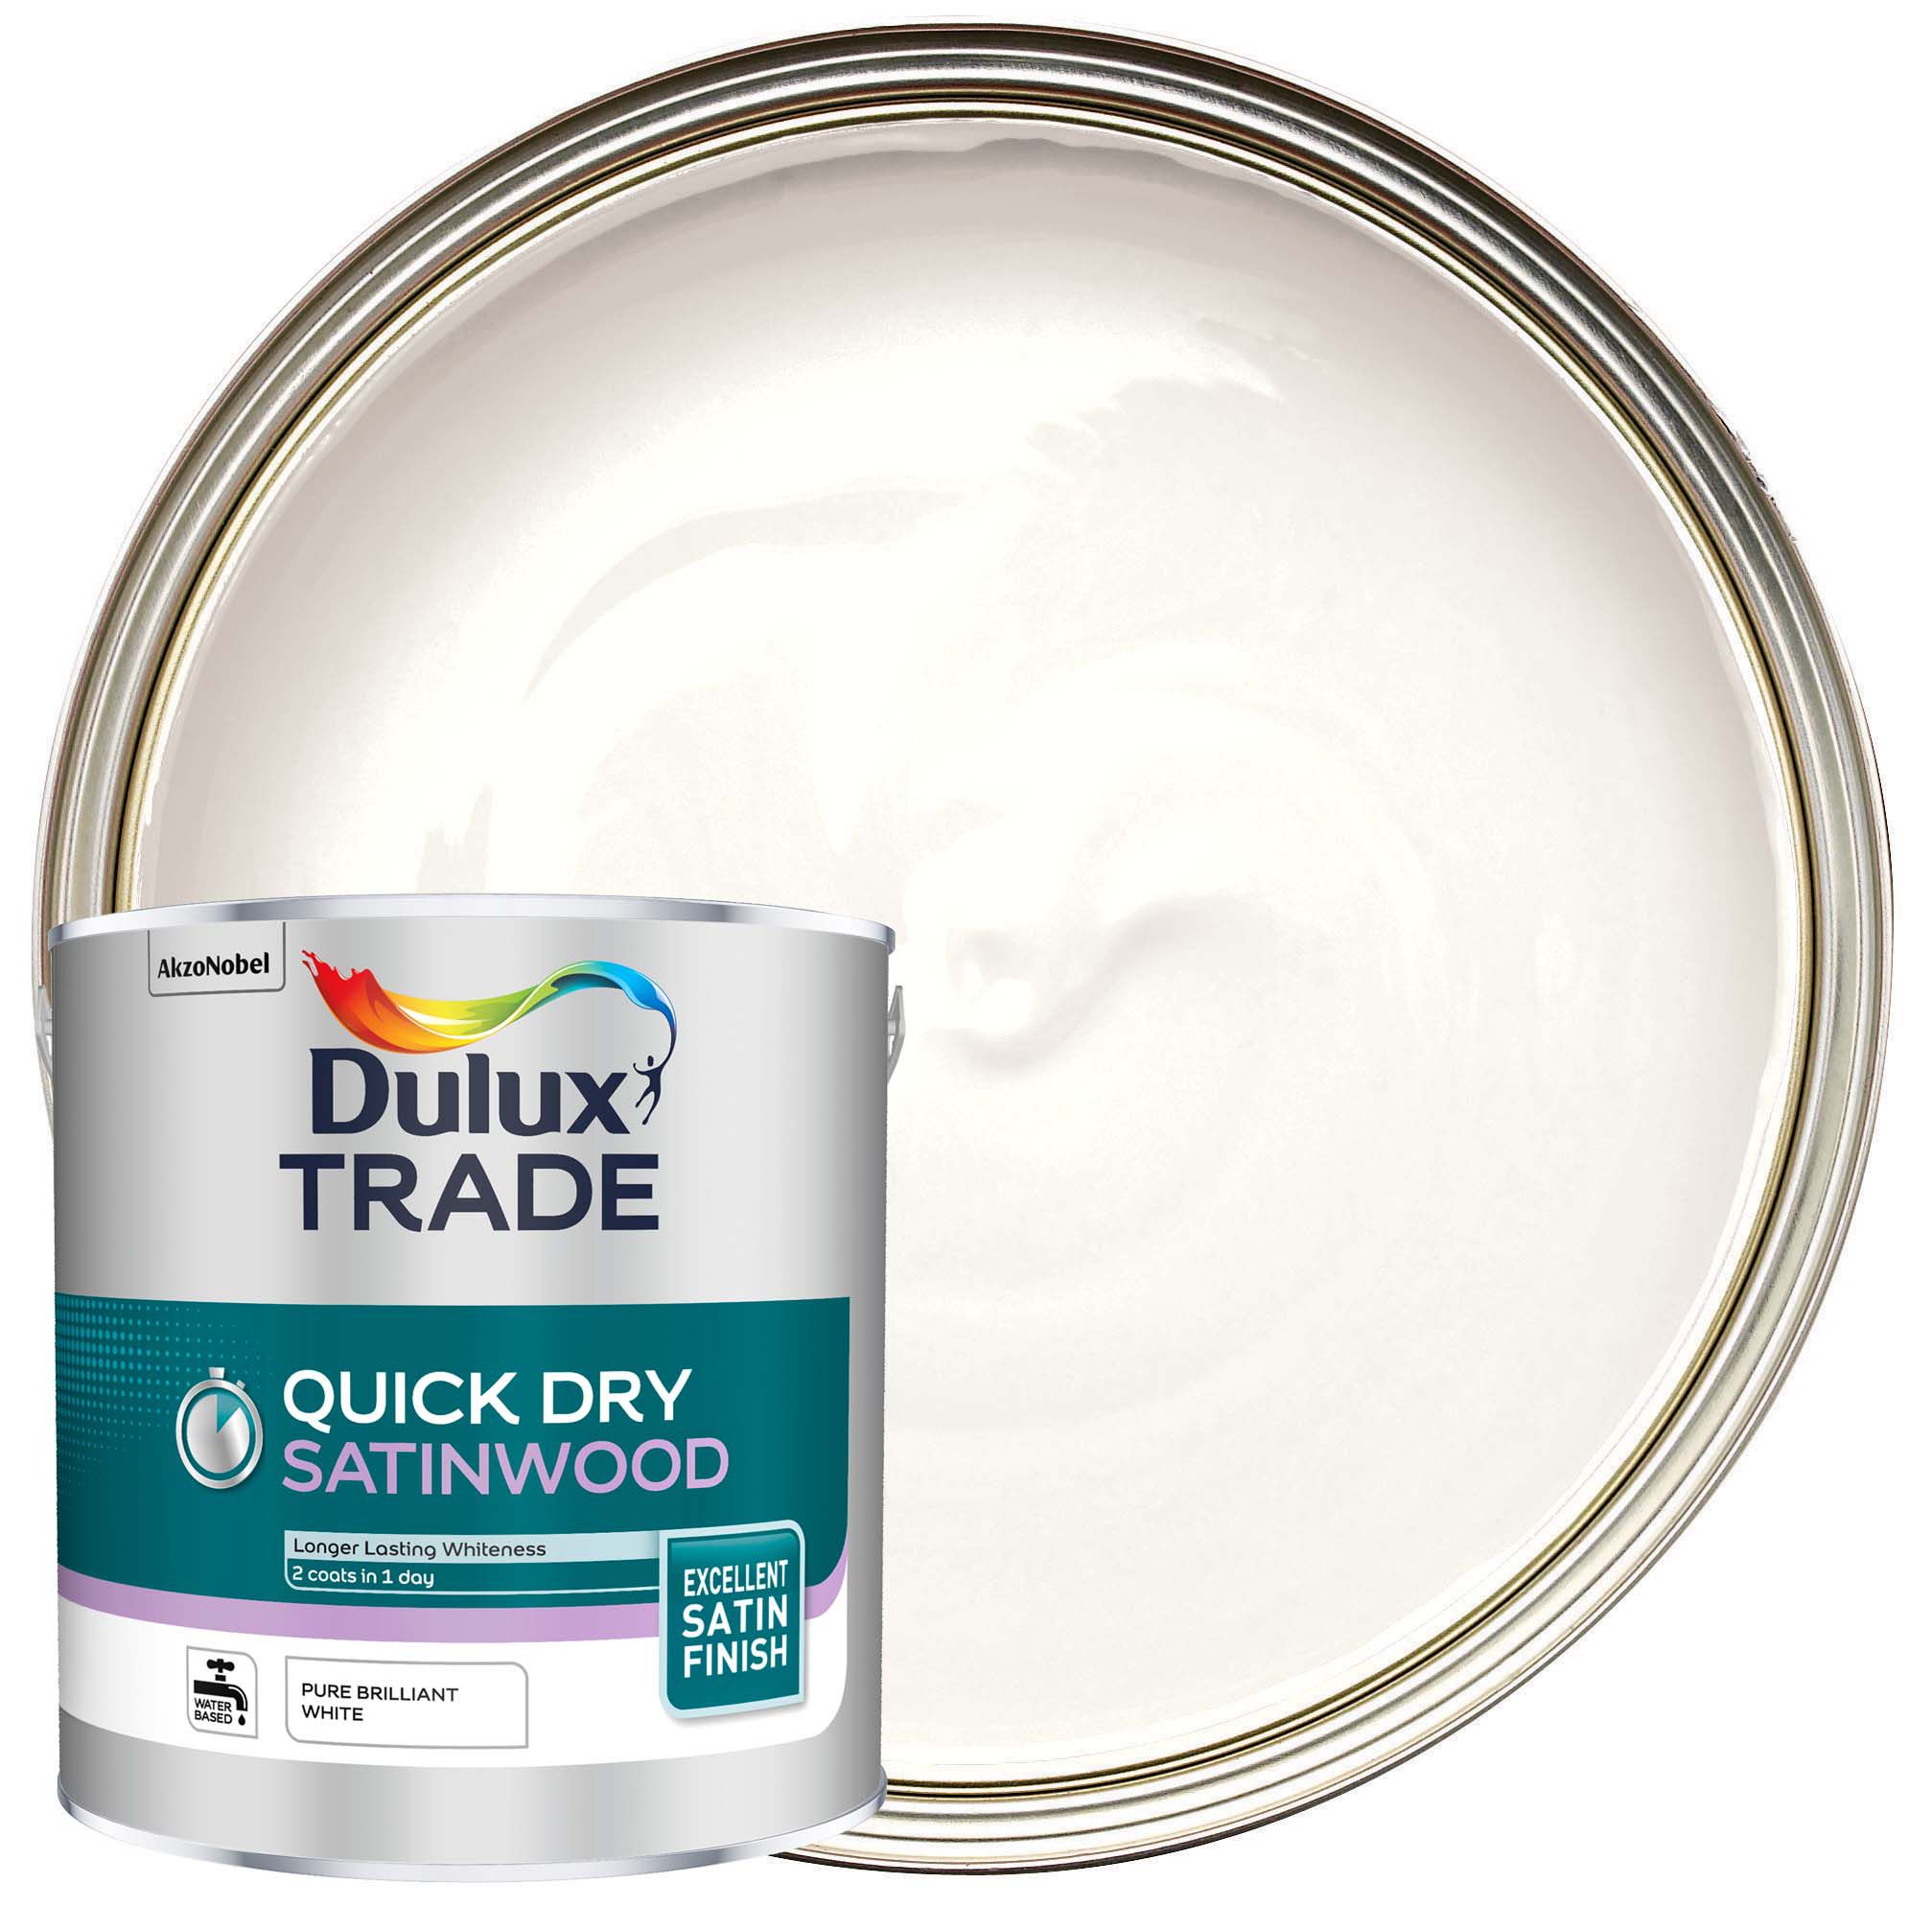 Dulux Trade Quick Dry Satinwood Paint - Pure Brilliant White - 2.5L